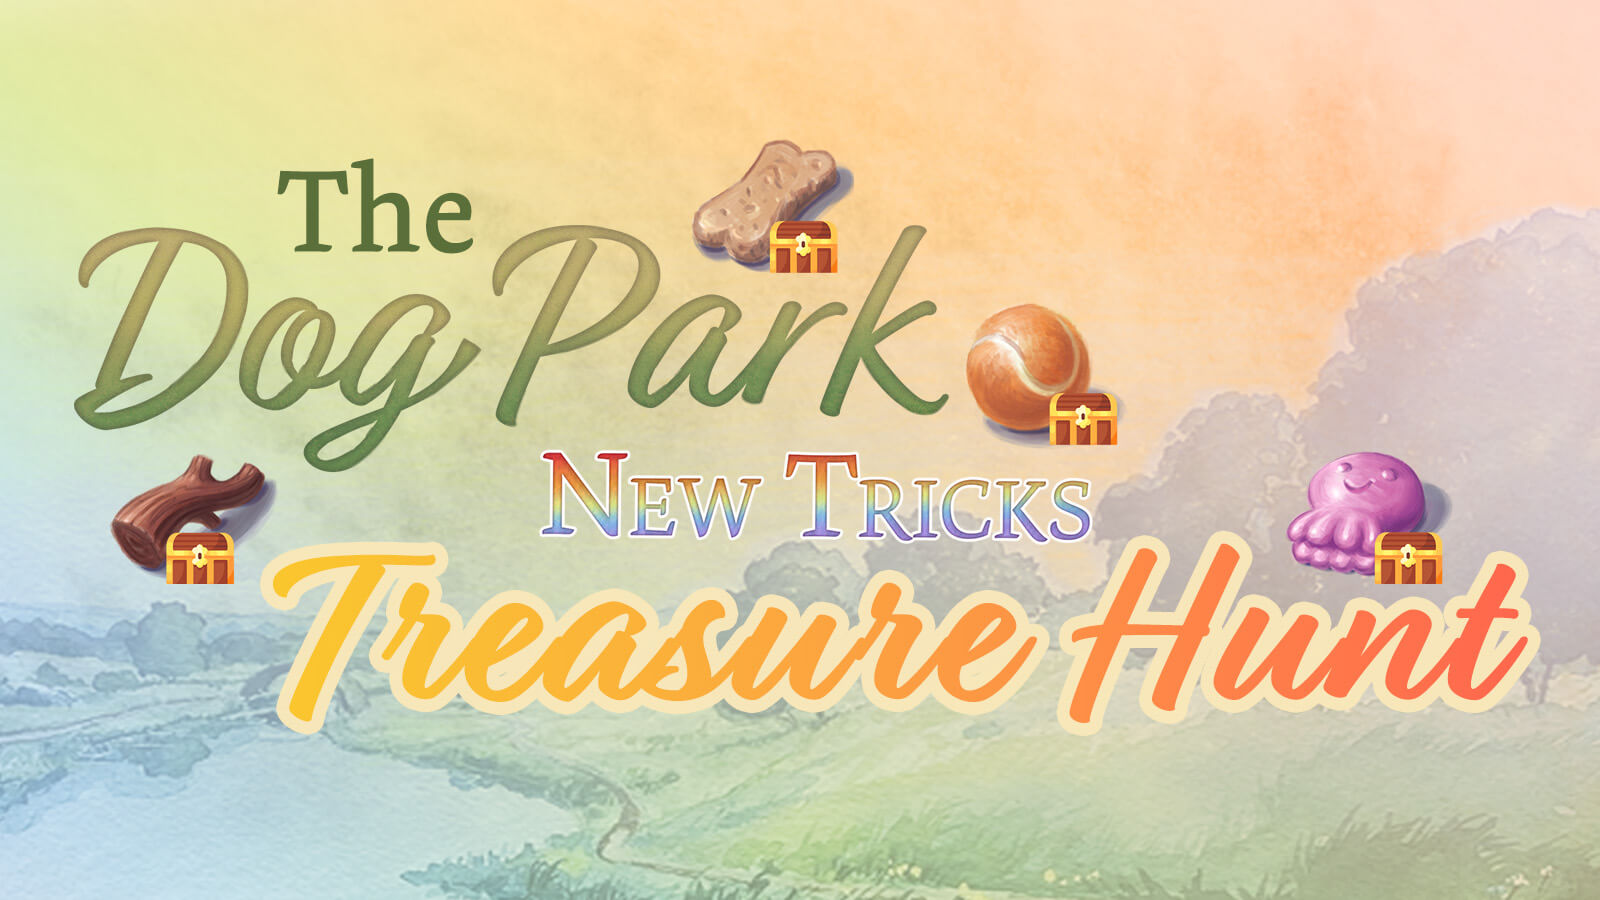 Can You Complete the New Tricks Kickstarter Treasure Hunt?